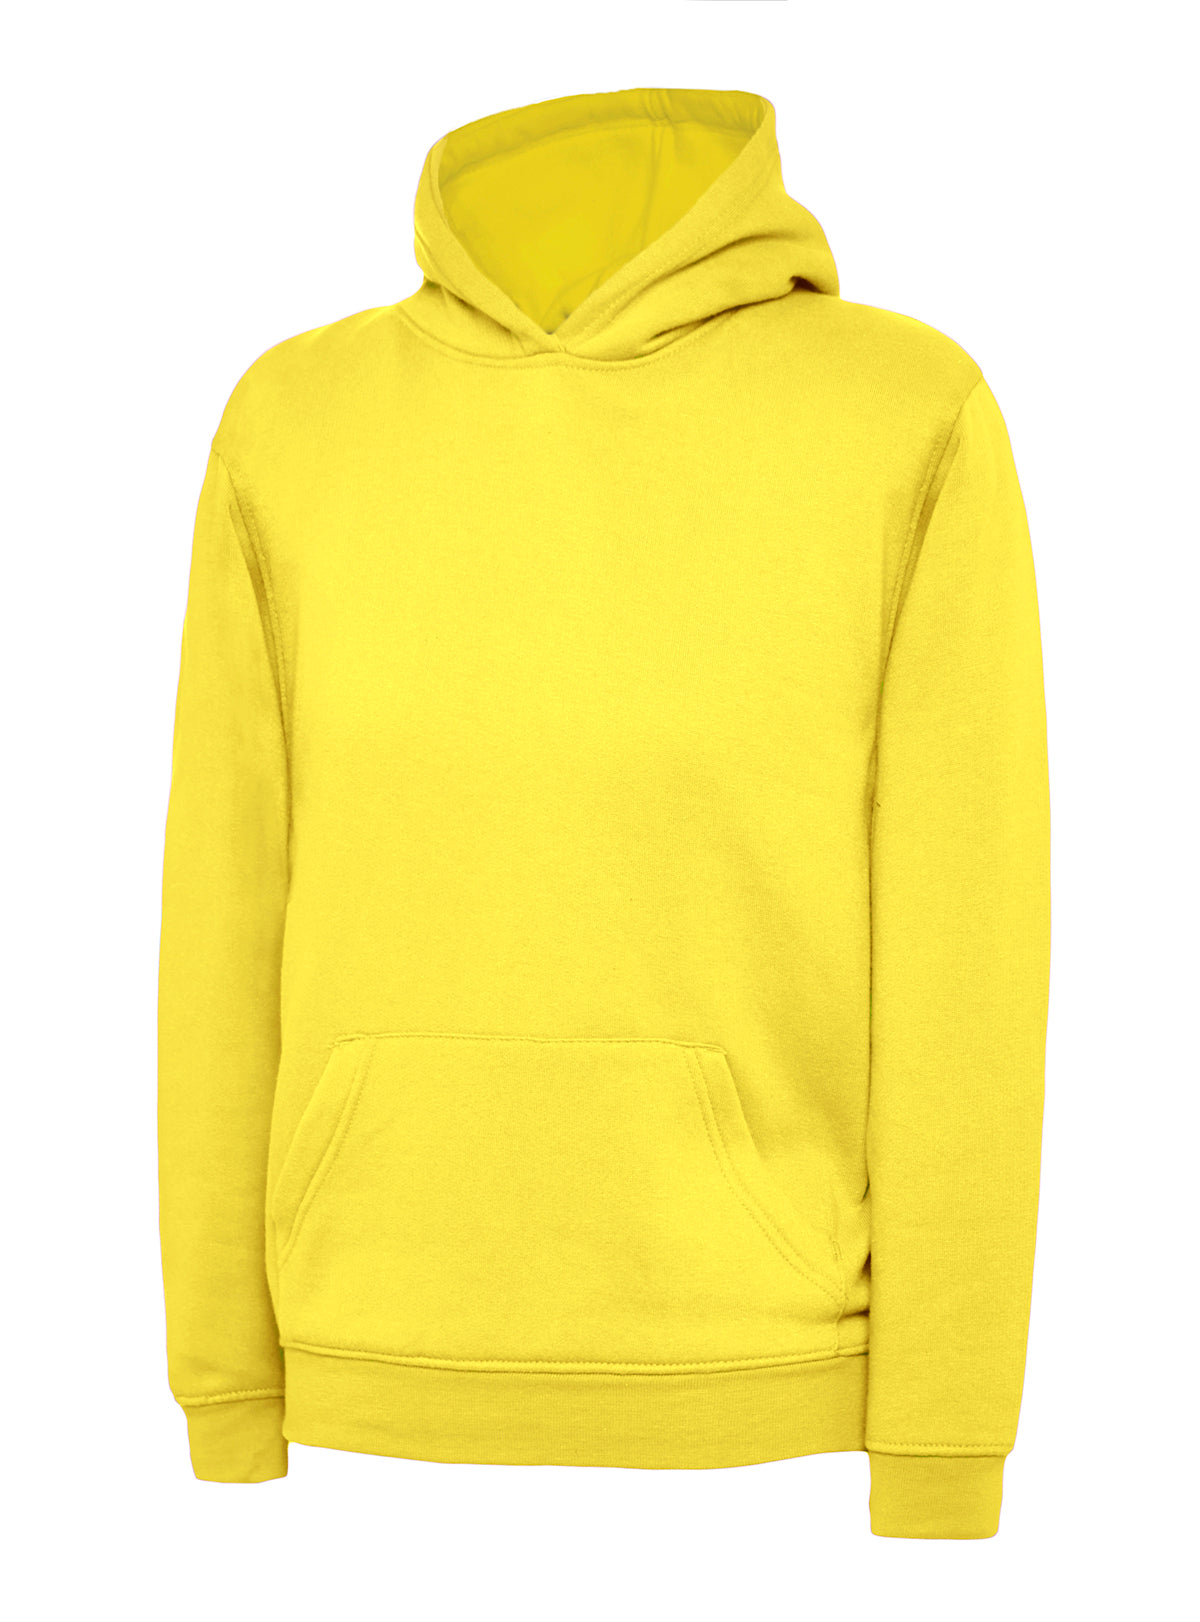 Uneek Childrens Hoodie Sweatshirt - Yellow